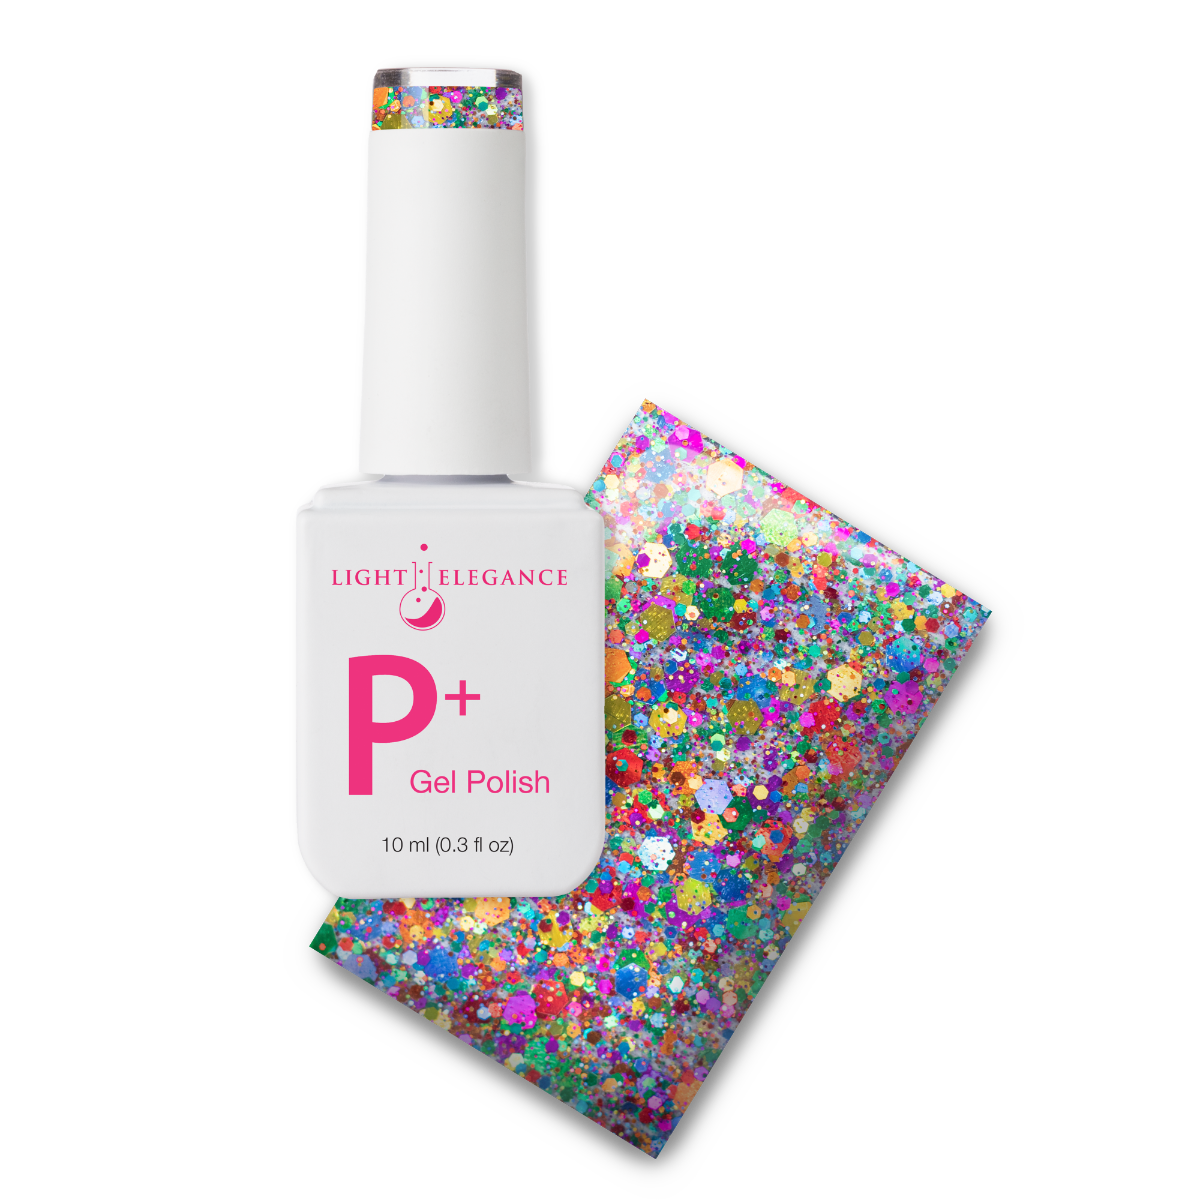 Light Elegance P+ Soak Off Glitter Gel - Everyone's a Critic :: New Packaging - Creata Beauty - Professional Beauty Products